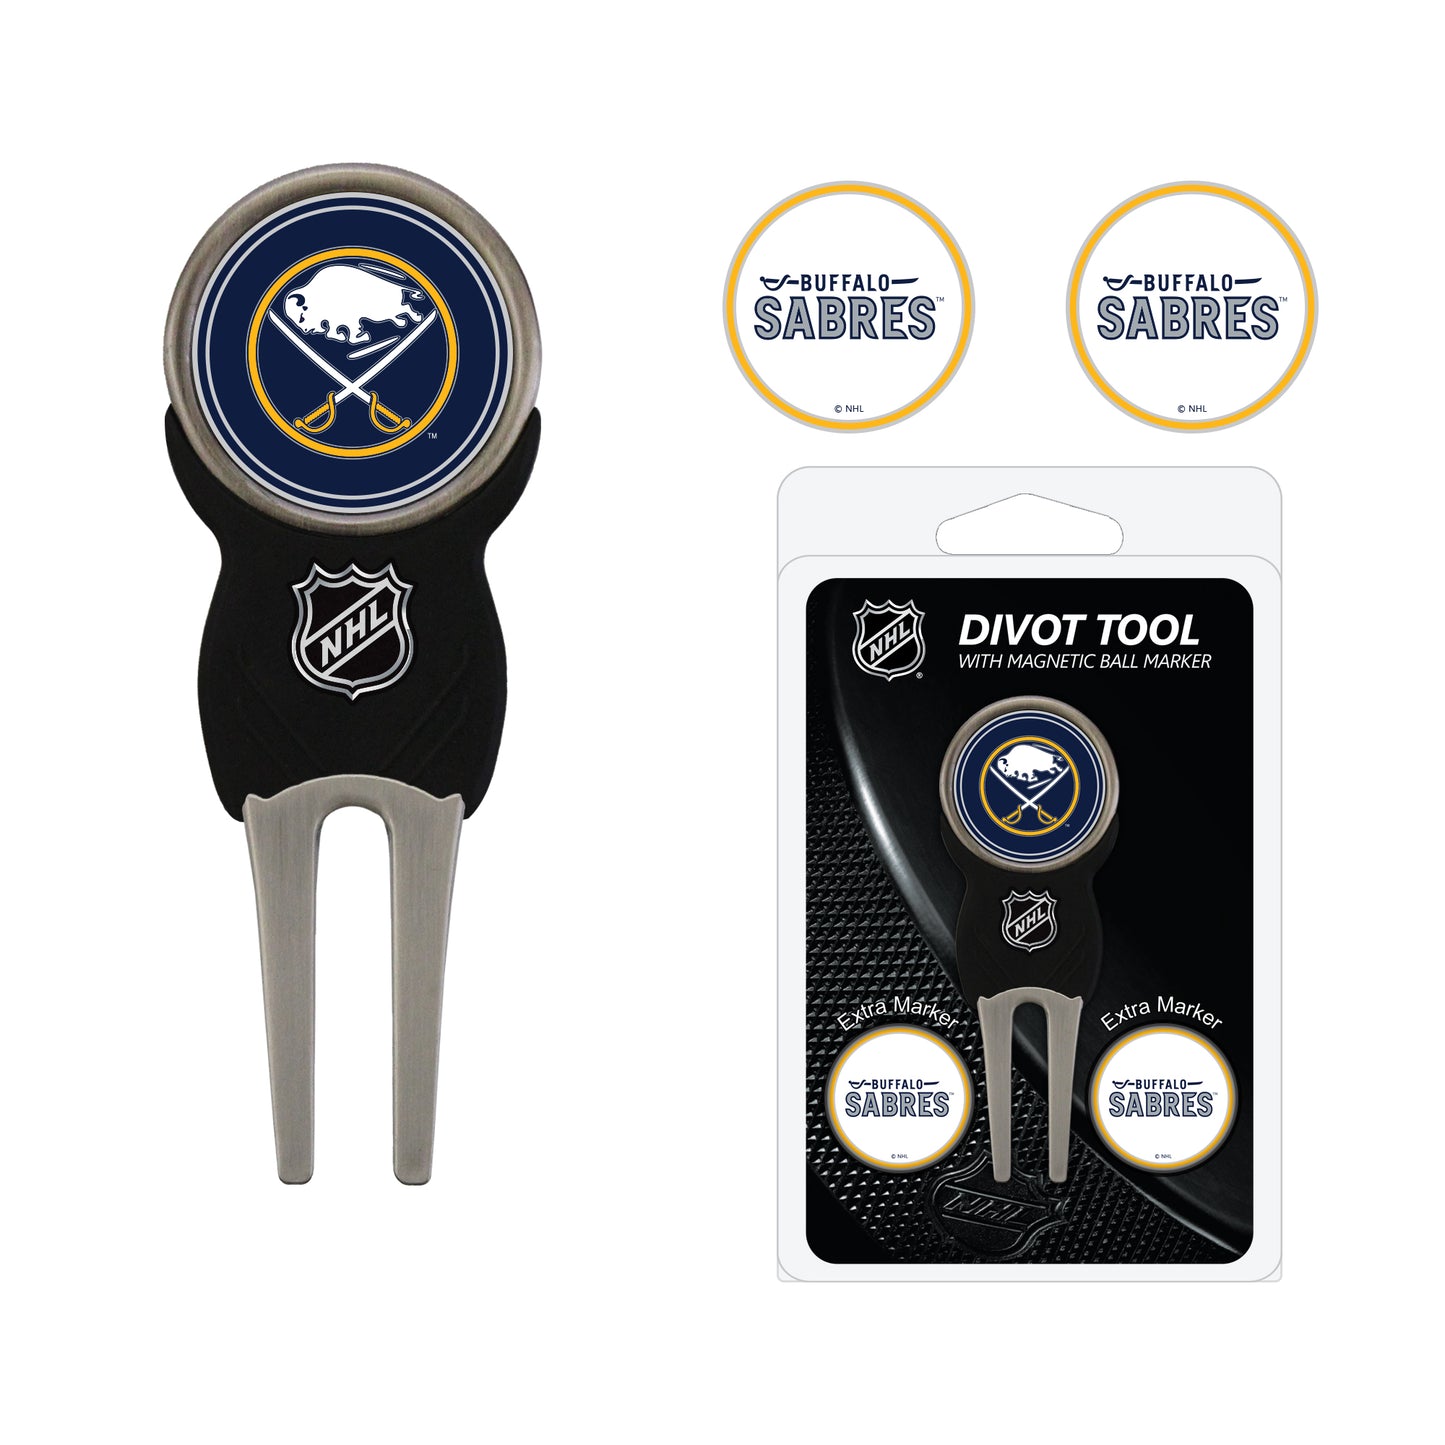 NHL custom golf divot tools - buffalo sabres